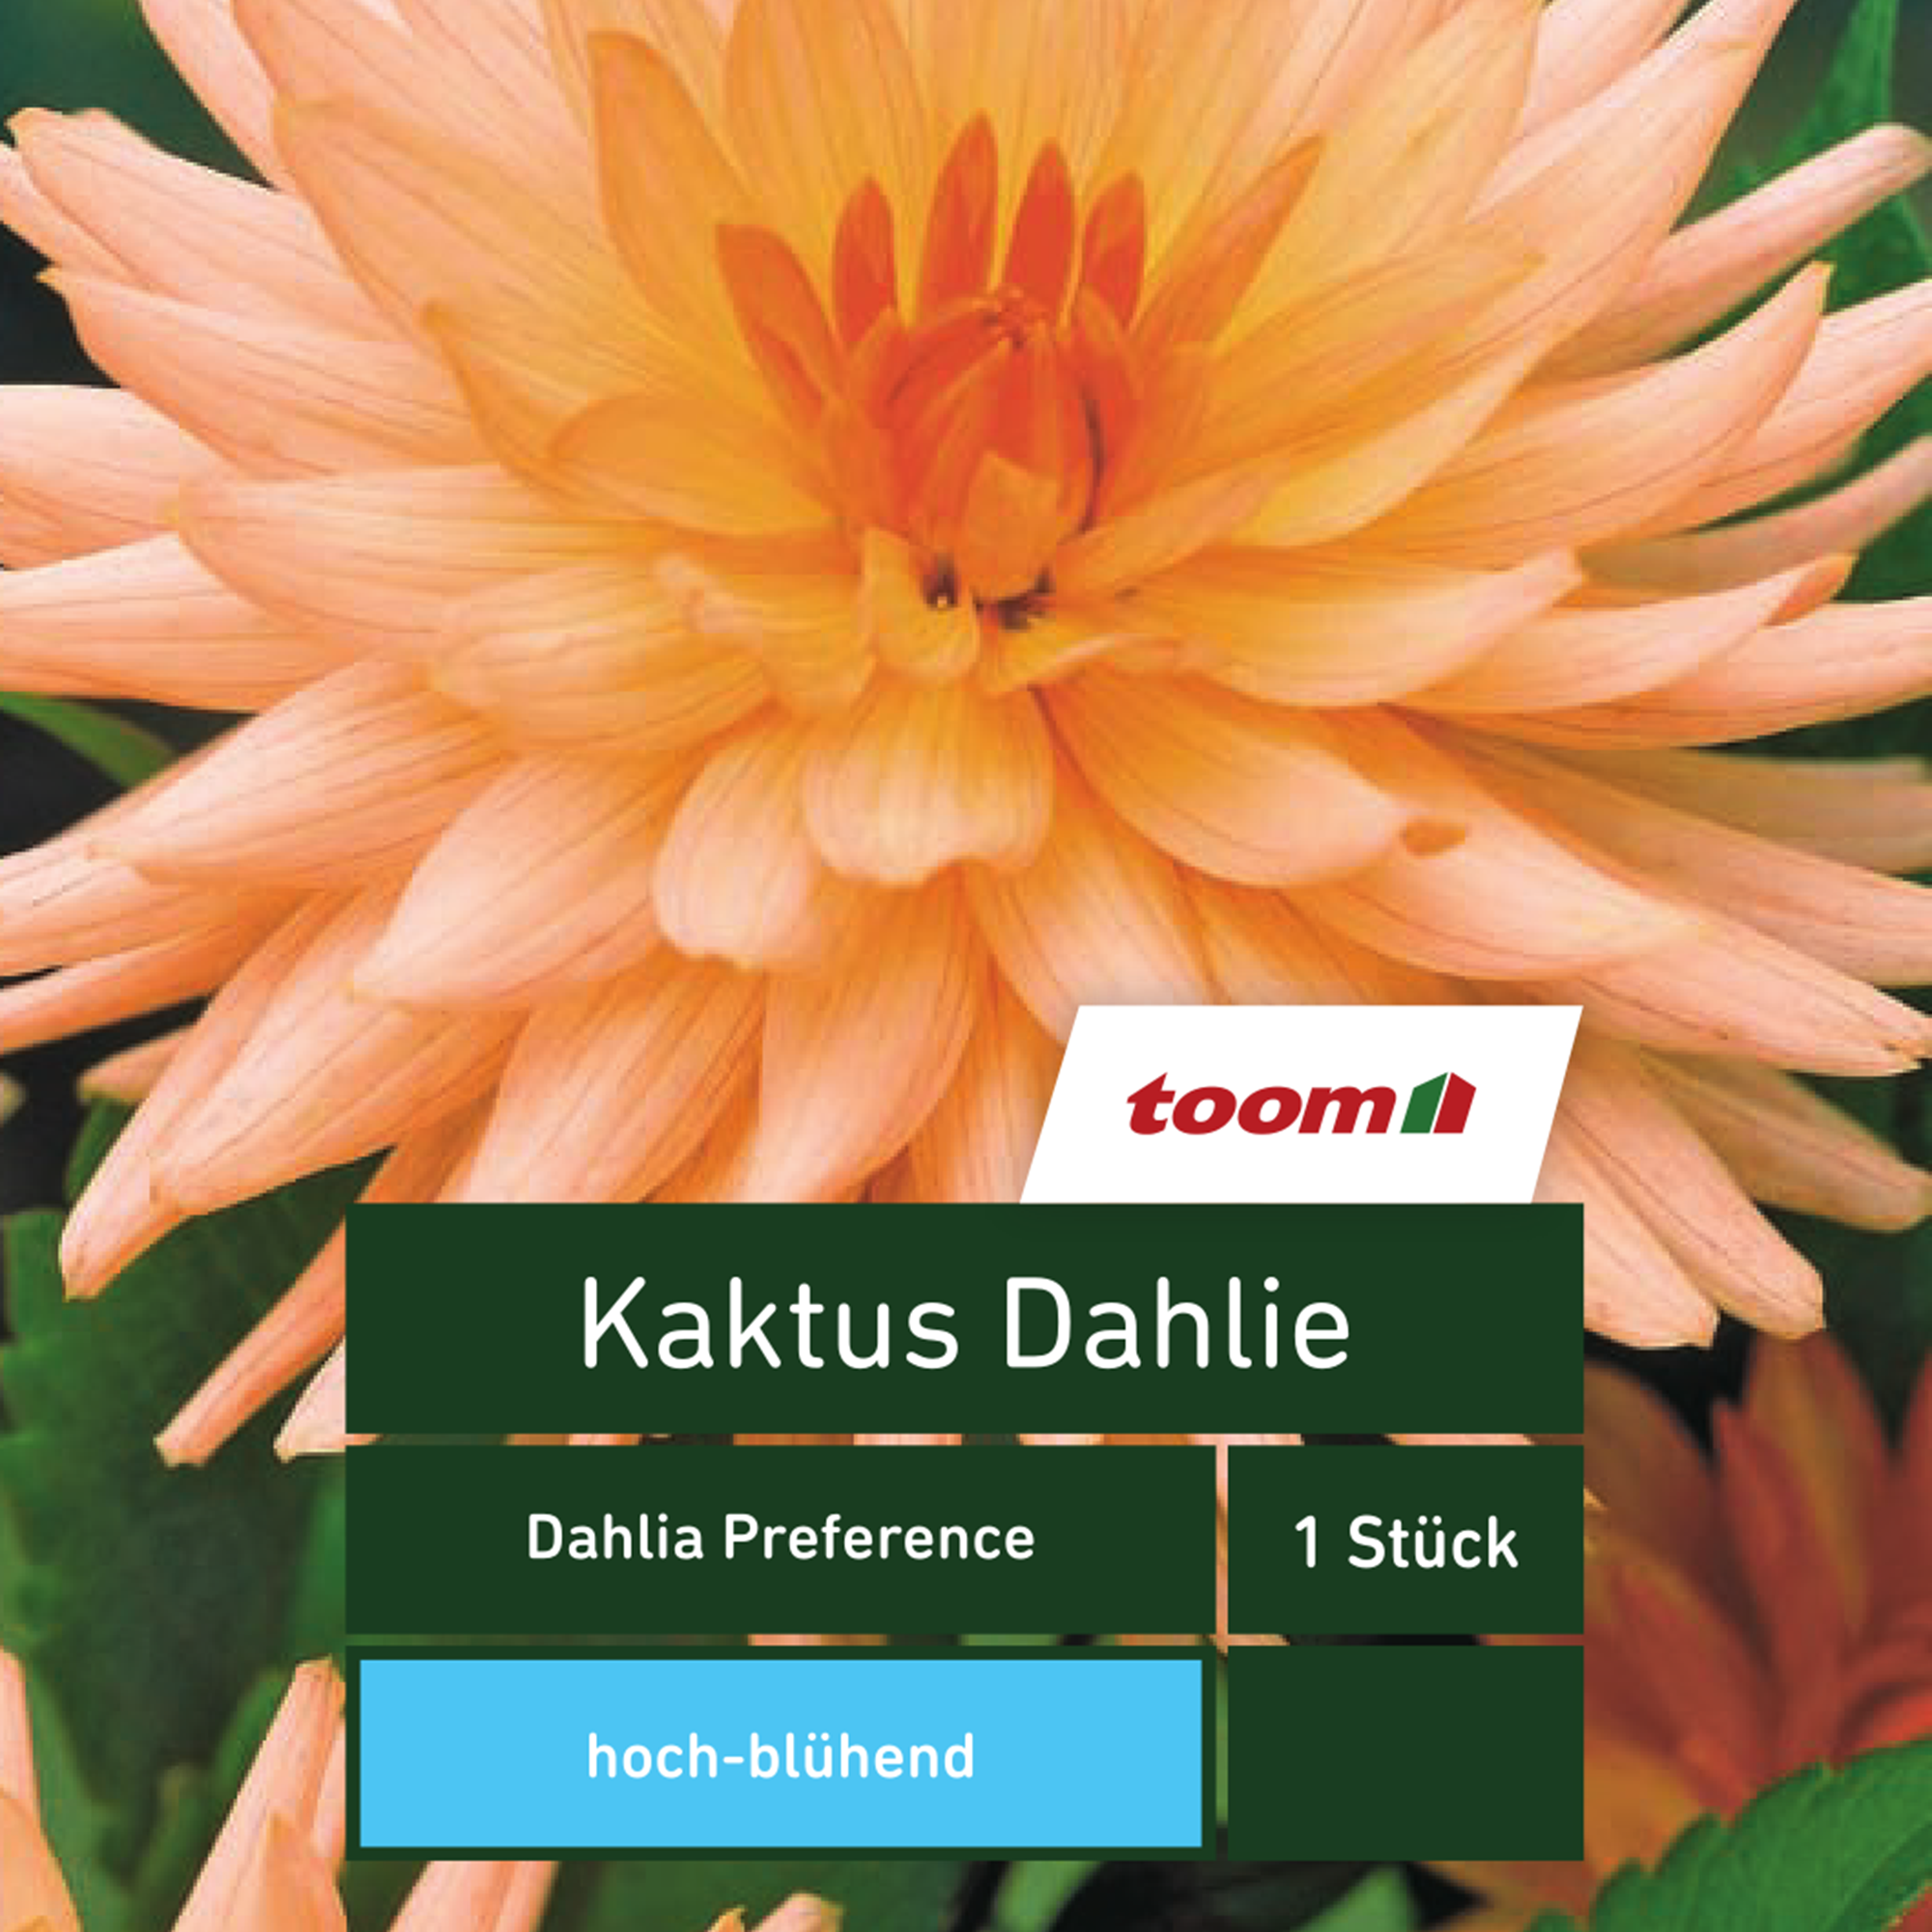 Kaktus-Dahlie 'Dahlia Preference', 1 Stück, orange + product picture